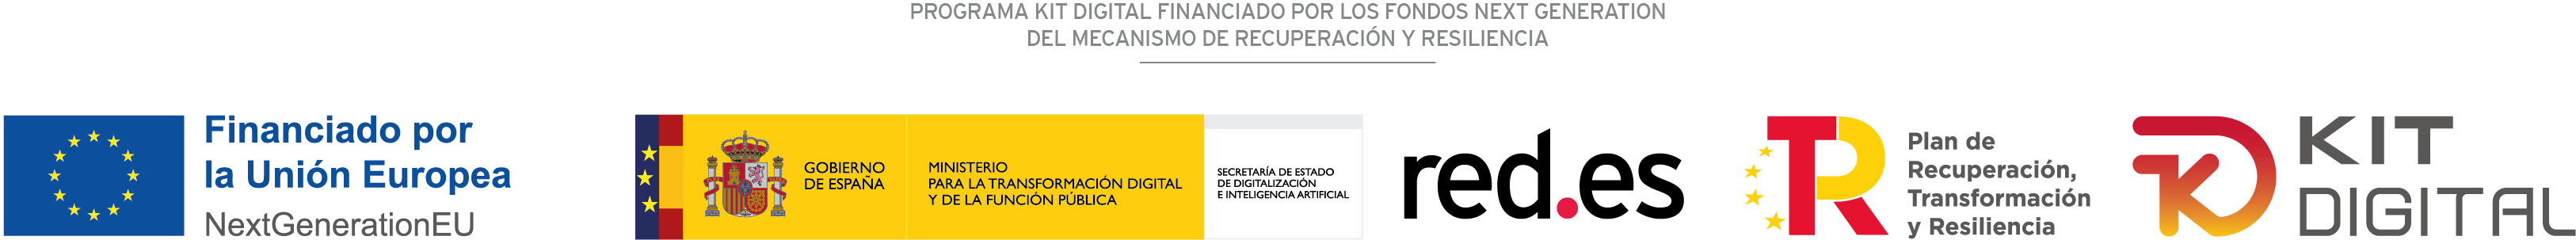 banner kit digital Tarragona y Reus